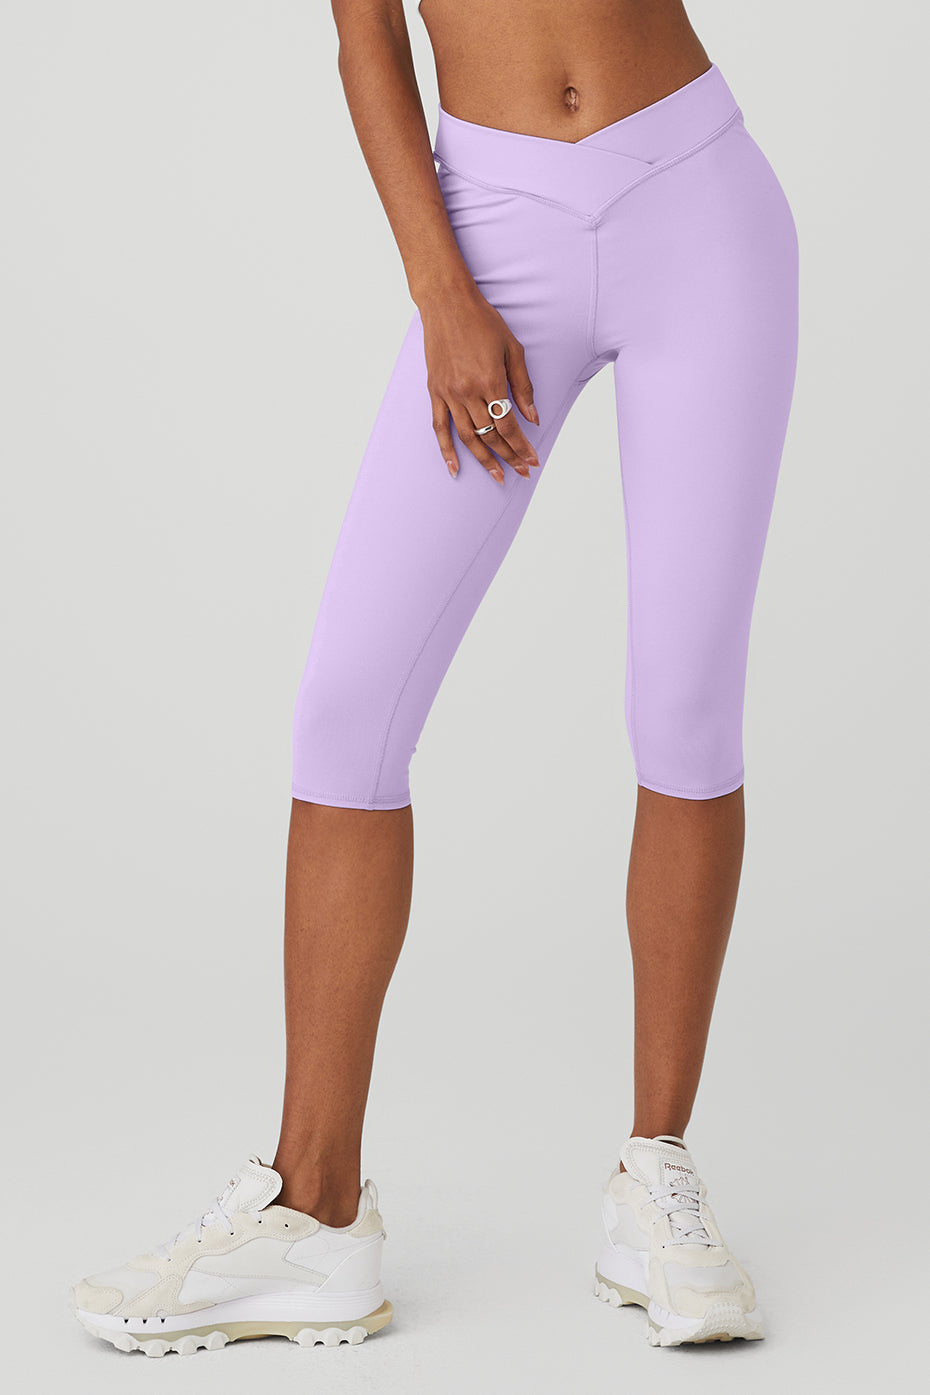 ANIVIVO Skirted Legging Women Yoga Tennis Dark Blue Purple Size M 